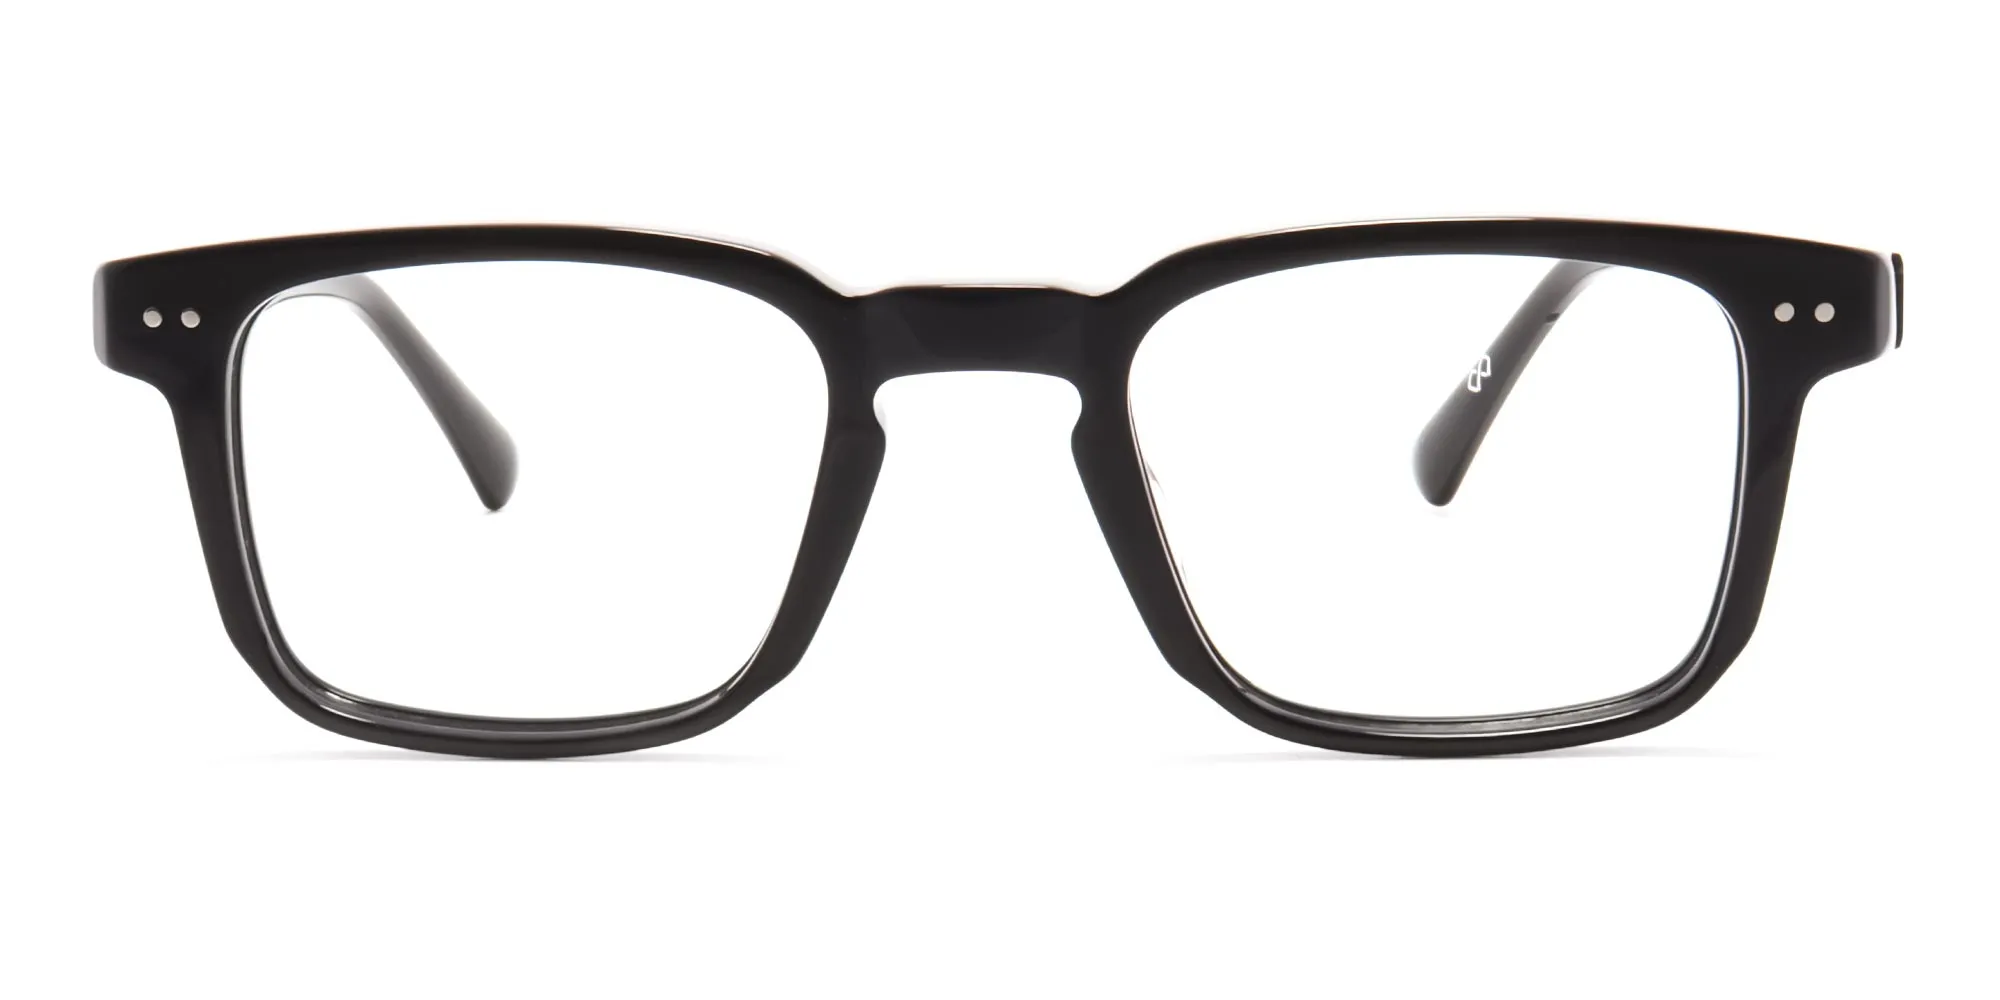 classic square eyeglasses frames -2